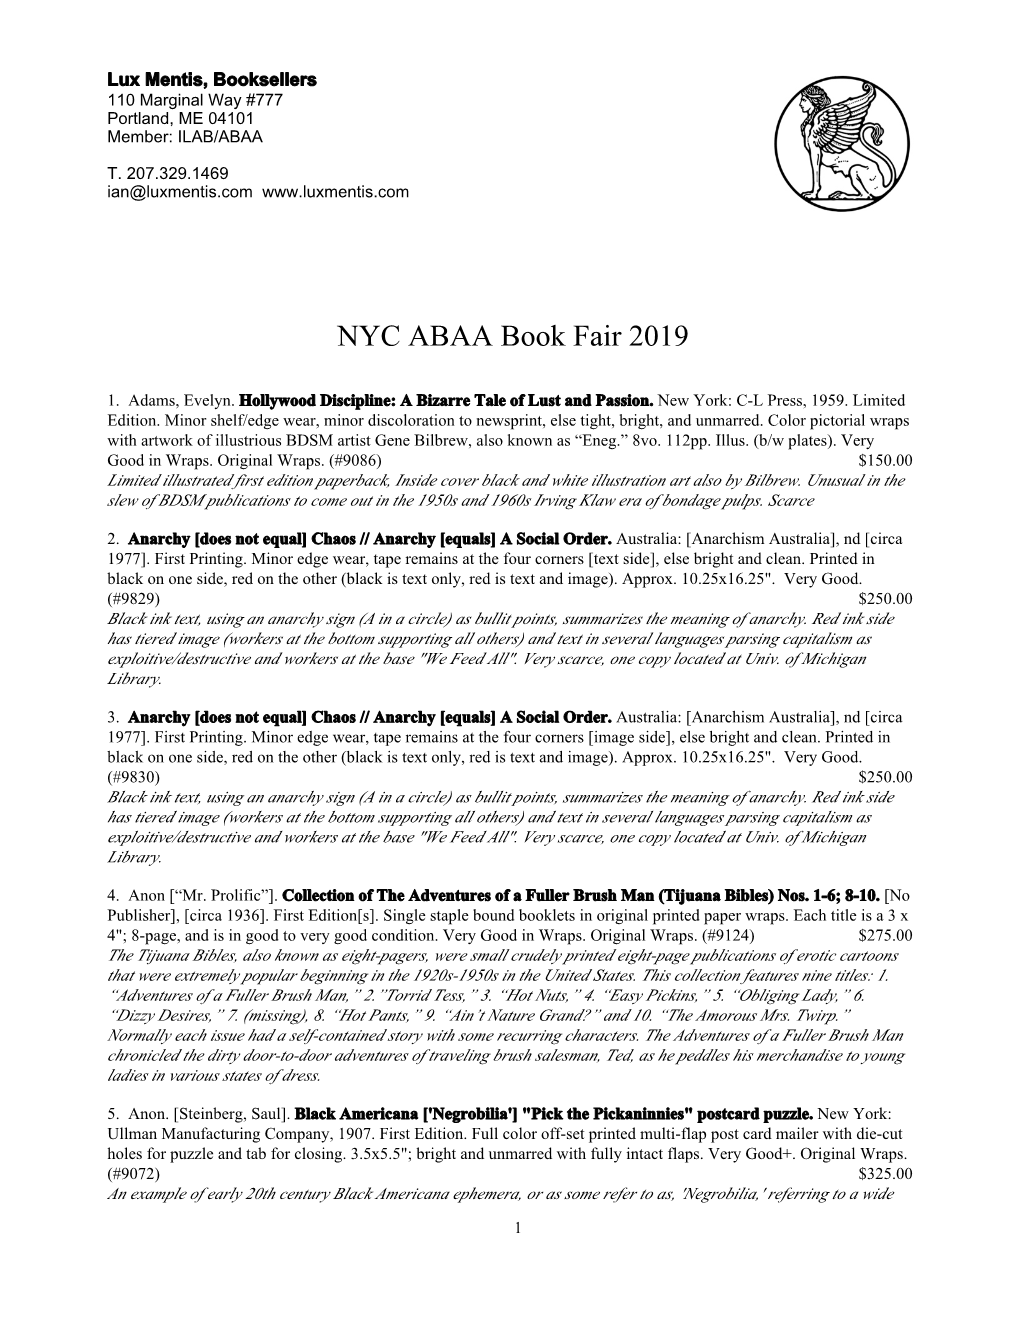 NYC ABAA Book Fair 2019